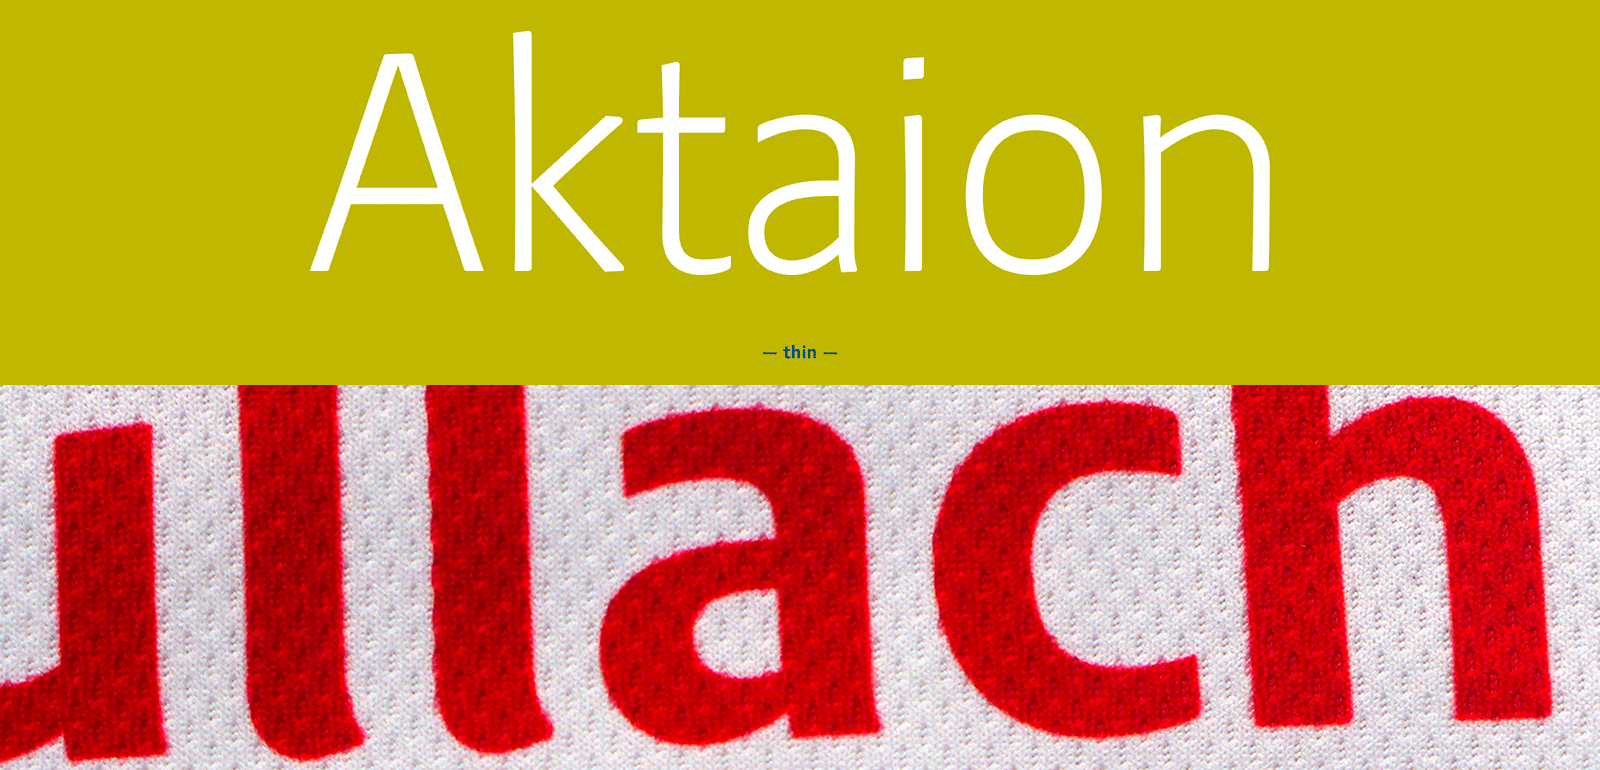 Aktaion sanserif typeface family by Jürgen Weltin, Type Matters